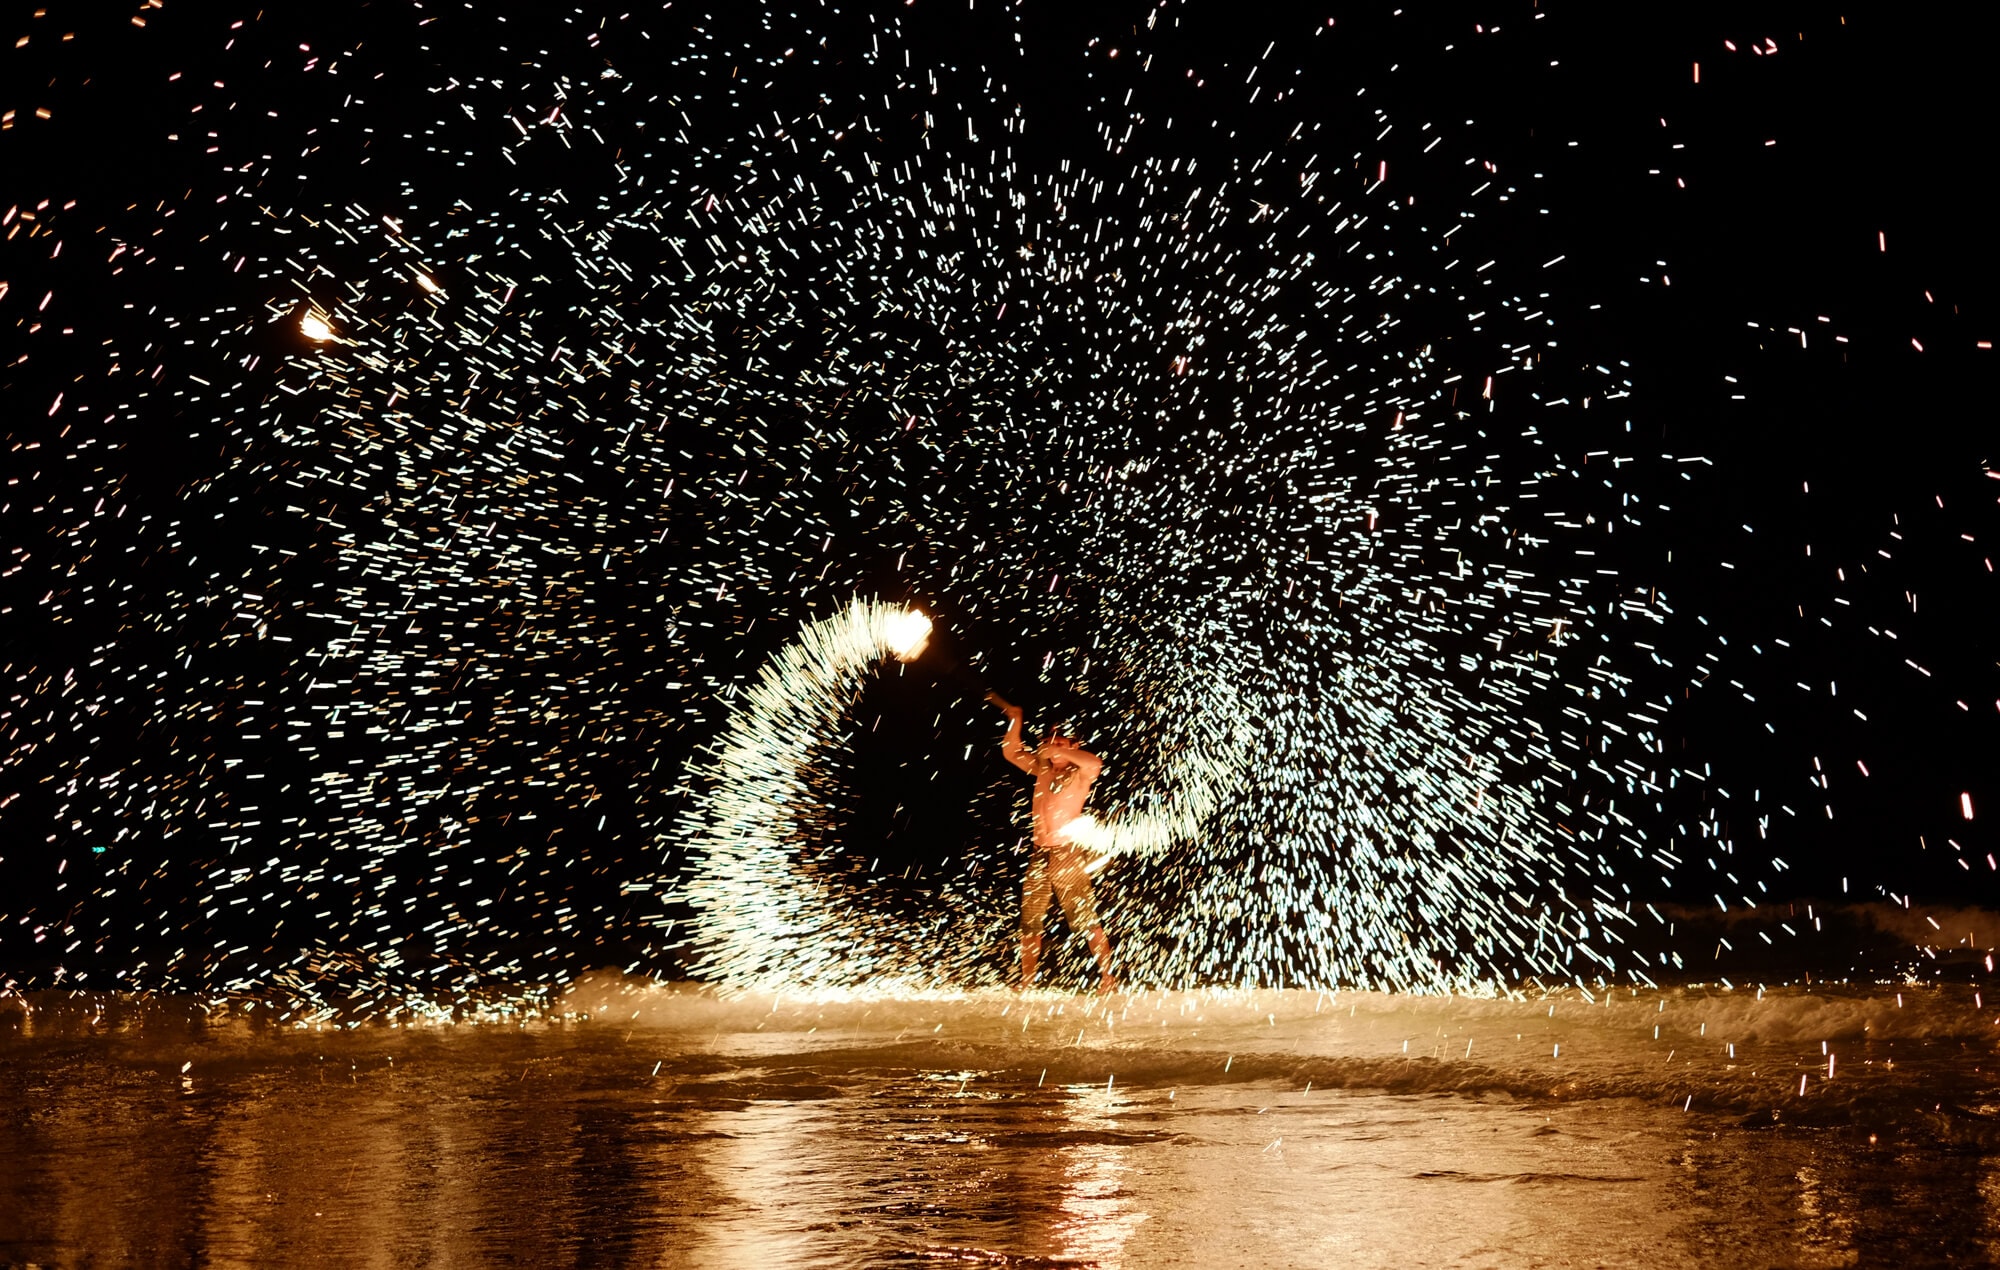 Fire dancer performing on the beach in Koh Samet against a black night sky.